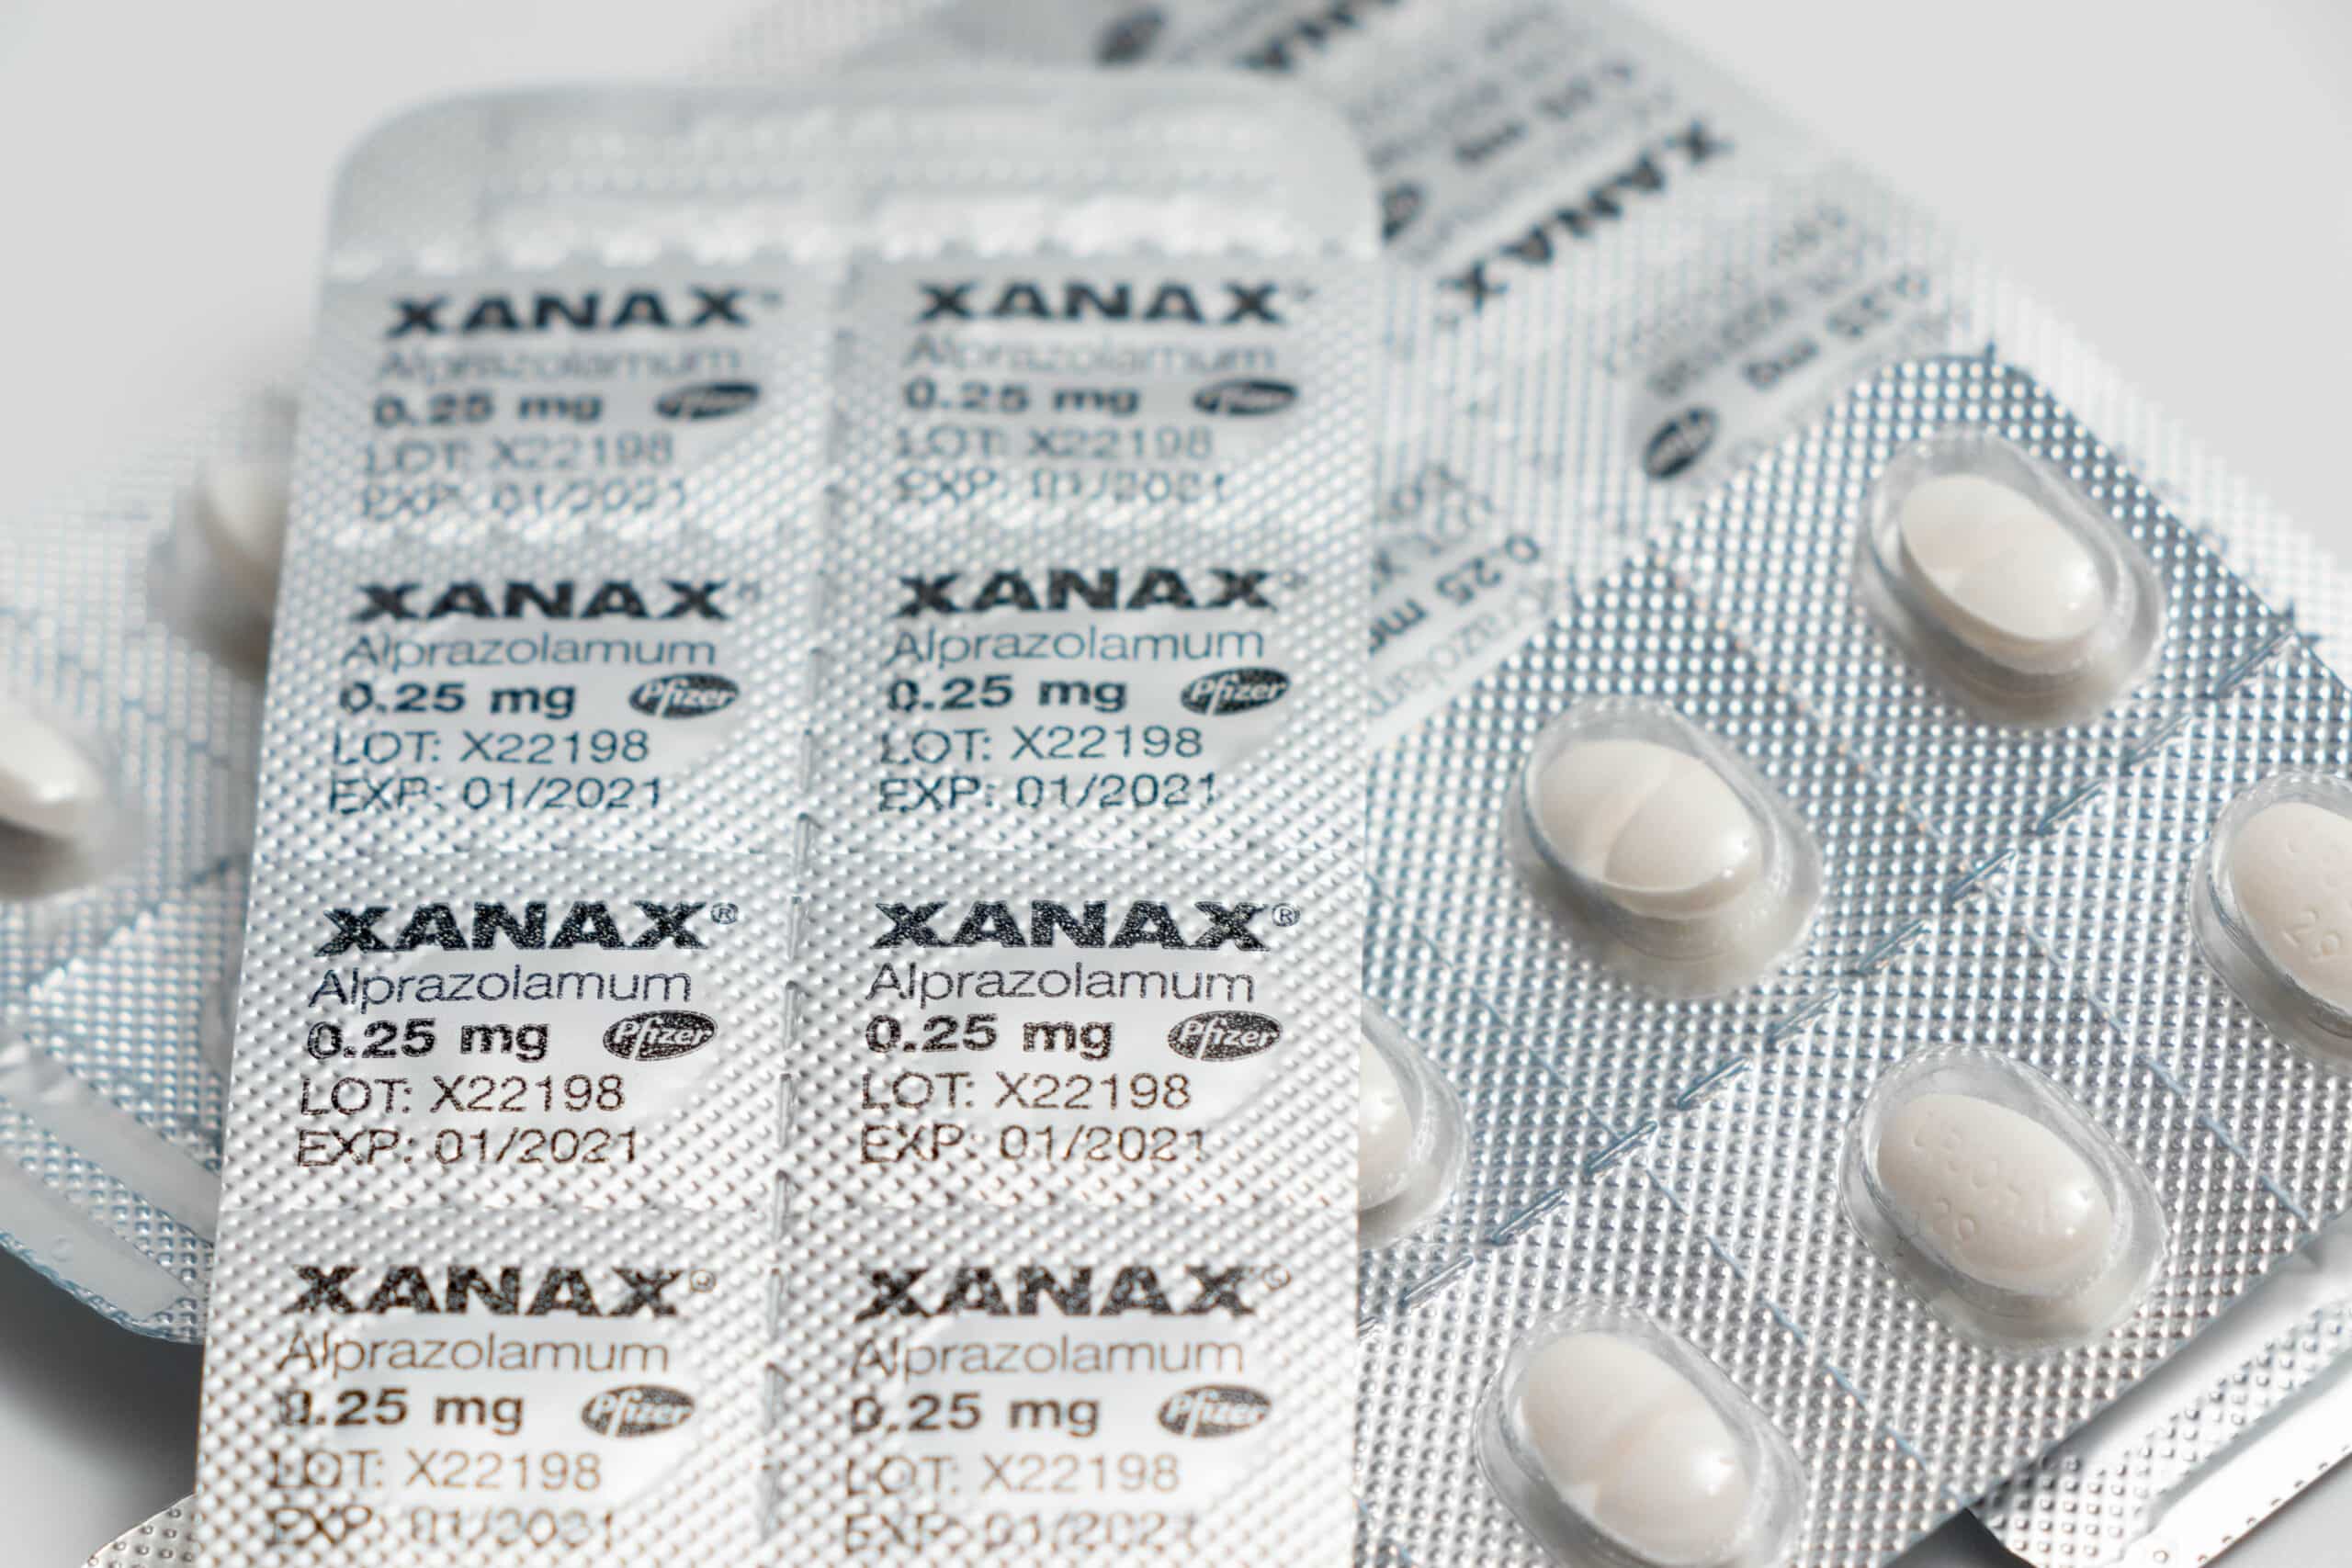  Xanax pills anxiolytic anti-depressant medication therapy drugs